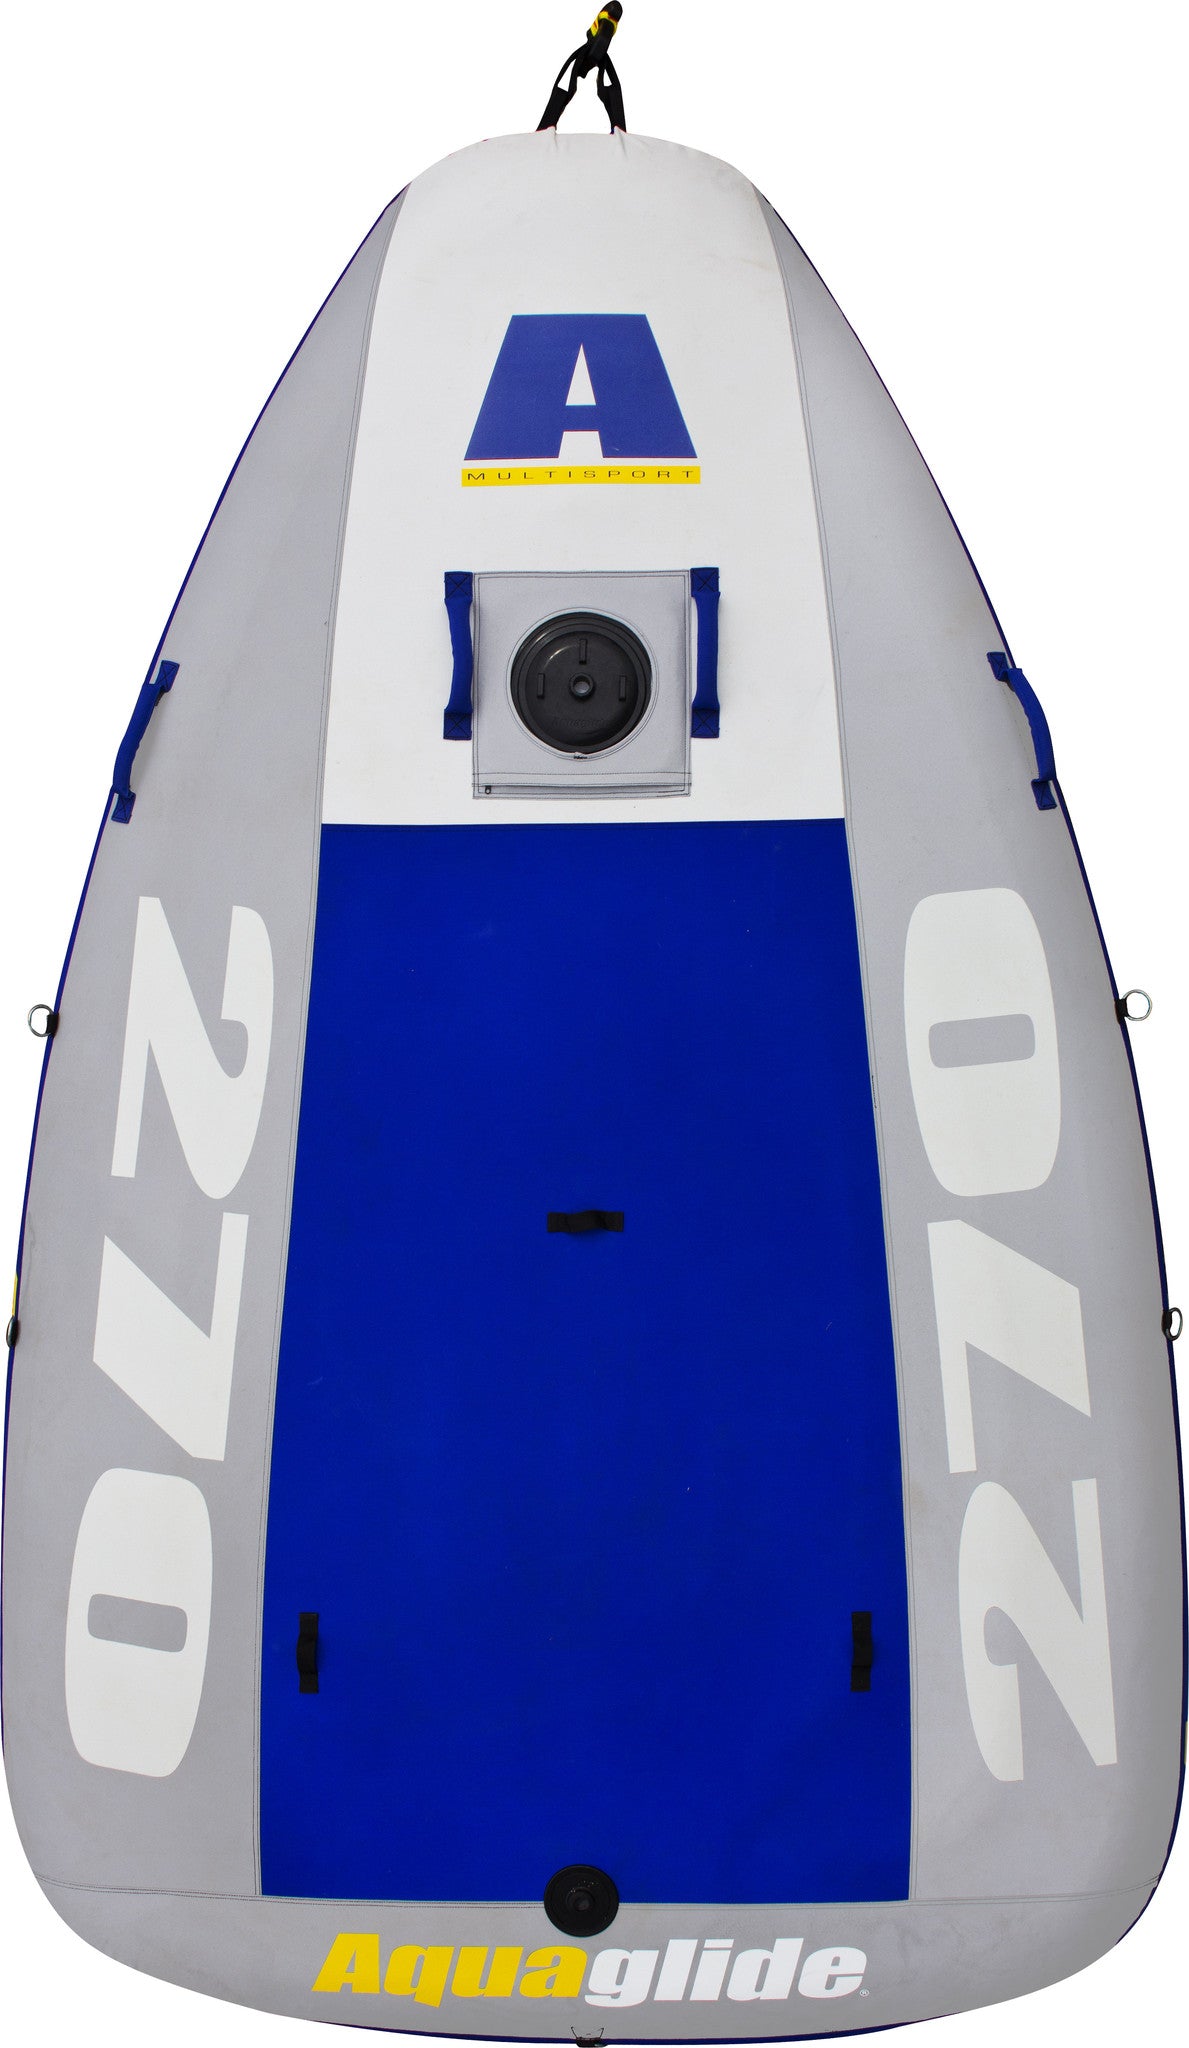 aquaglide multisport 270 inflatable sailboat